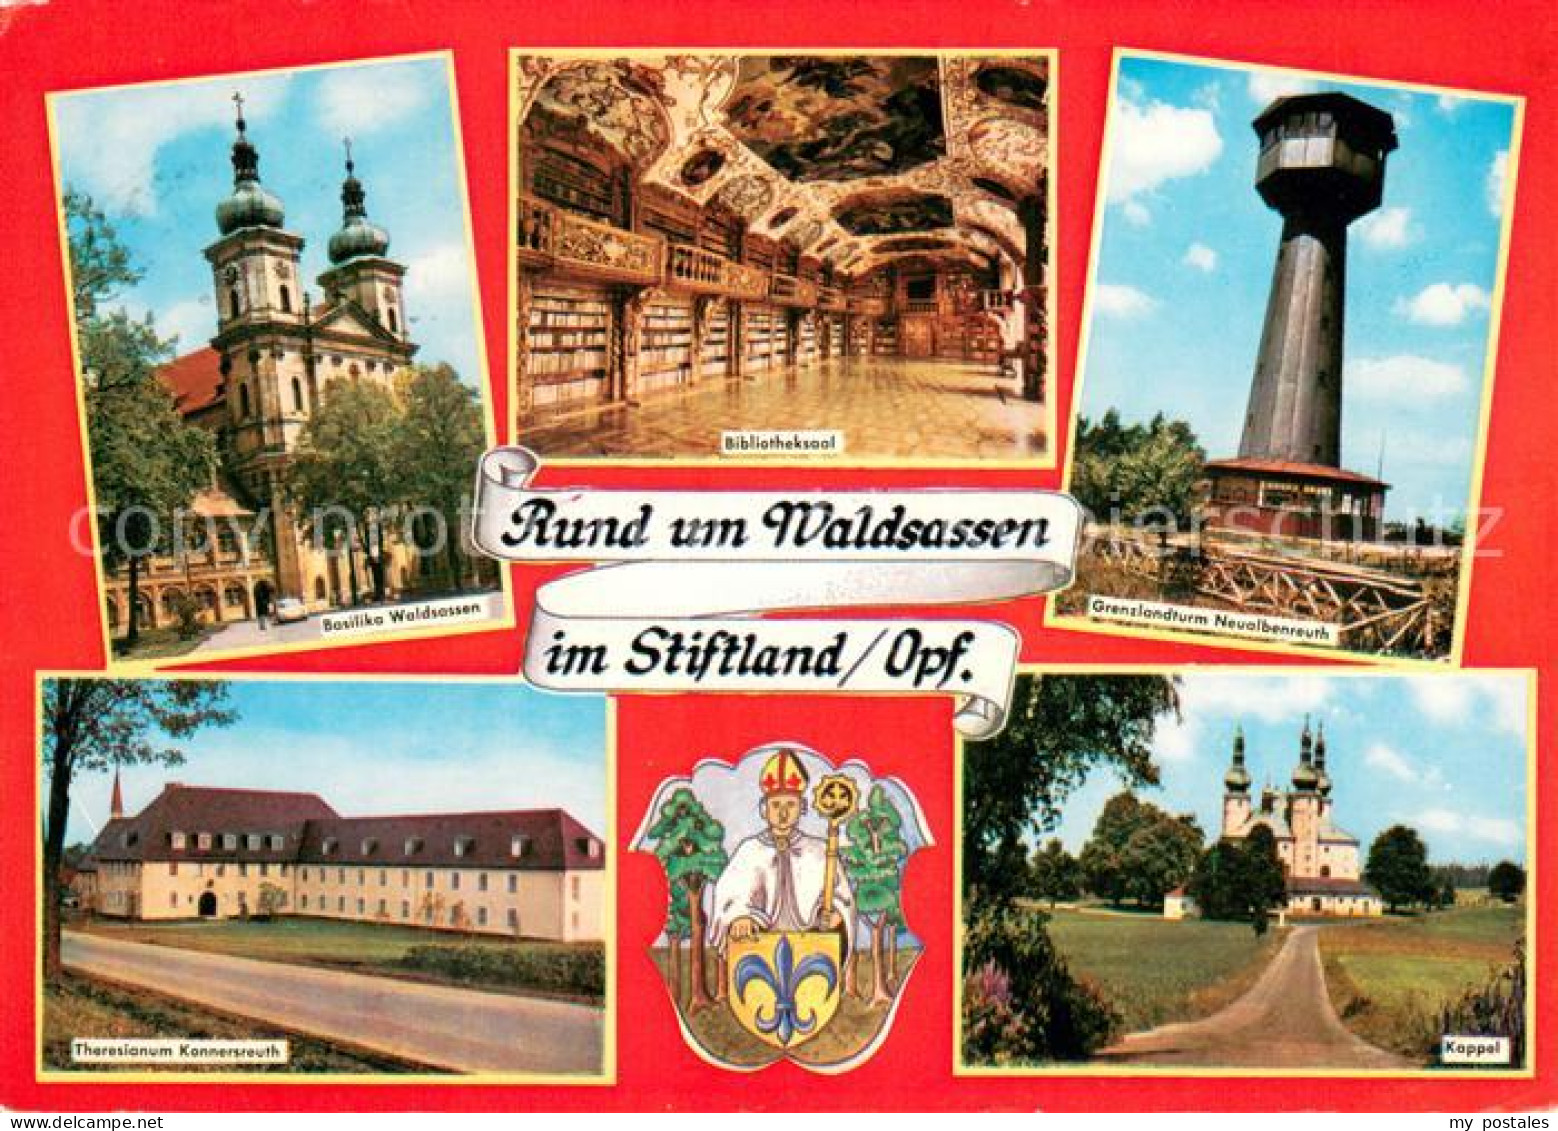 73671016 Waldsassen Basilika Bibliotheksaal Grenzlandturm Neualbenreuth Theresia - Waldsassen